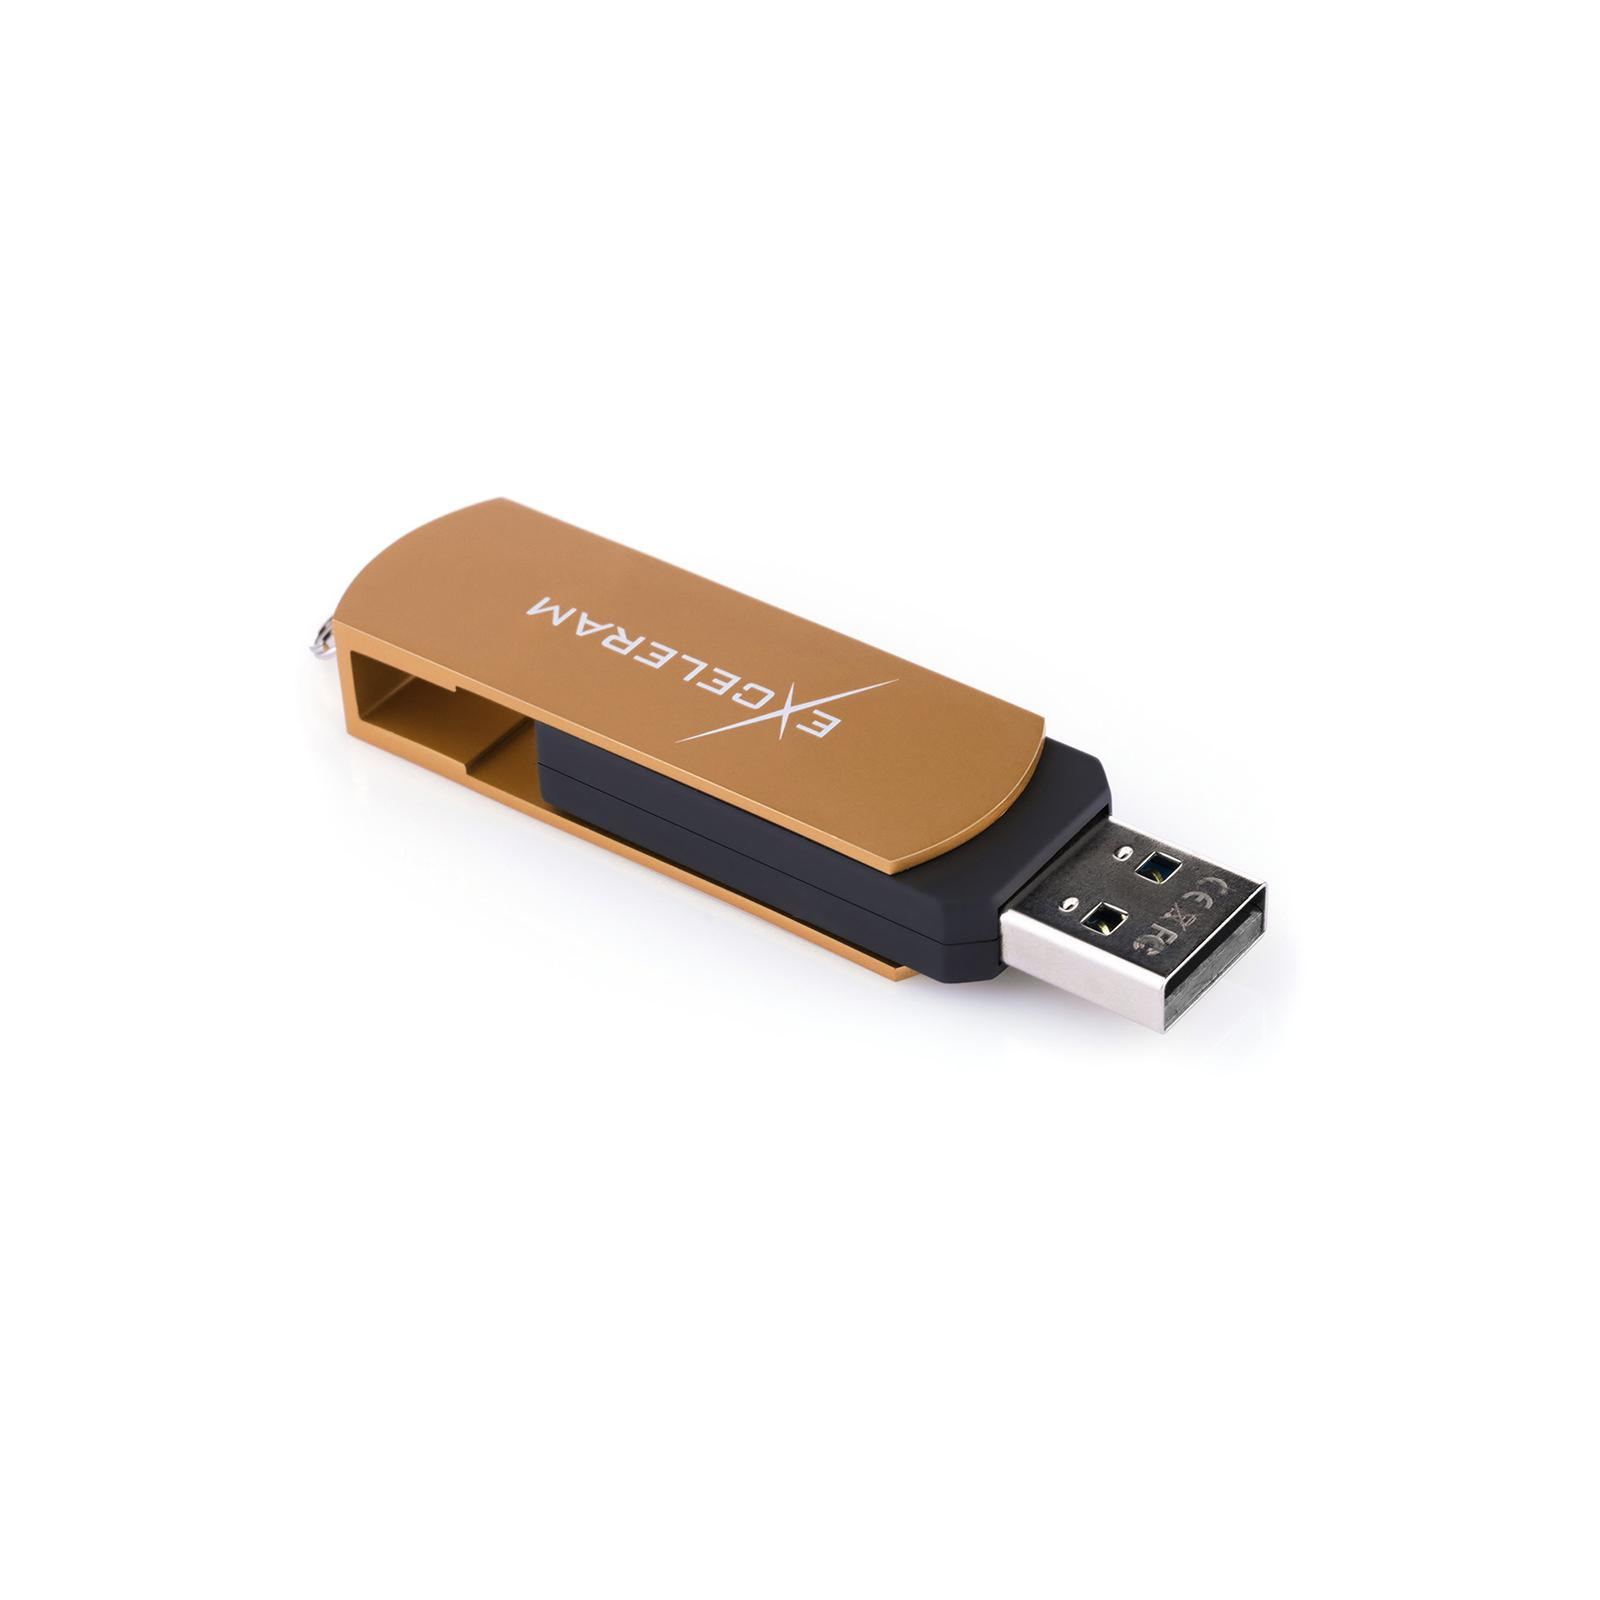 USB флеш накопитель eXceleram 32GB P2 Series Silver/Black USB 2.0 (EXP2U2SIB32) изображение 5